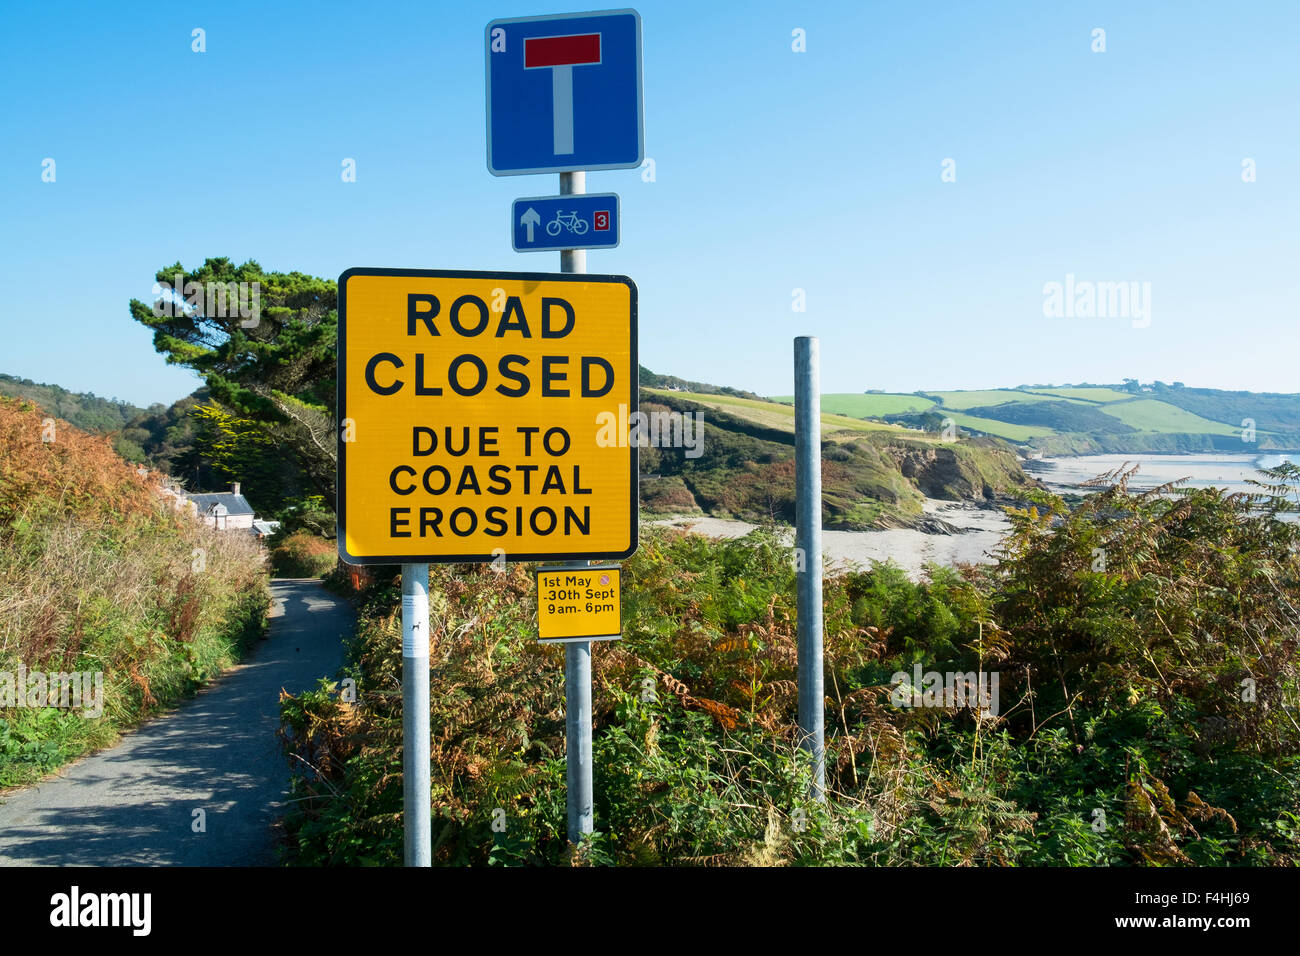 Road closed due to coastal erosion near Pendower beach in Cornwall, UK Stock Photo